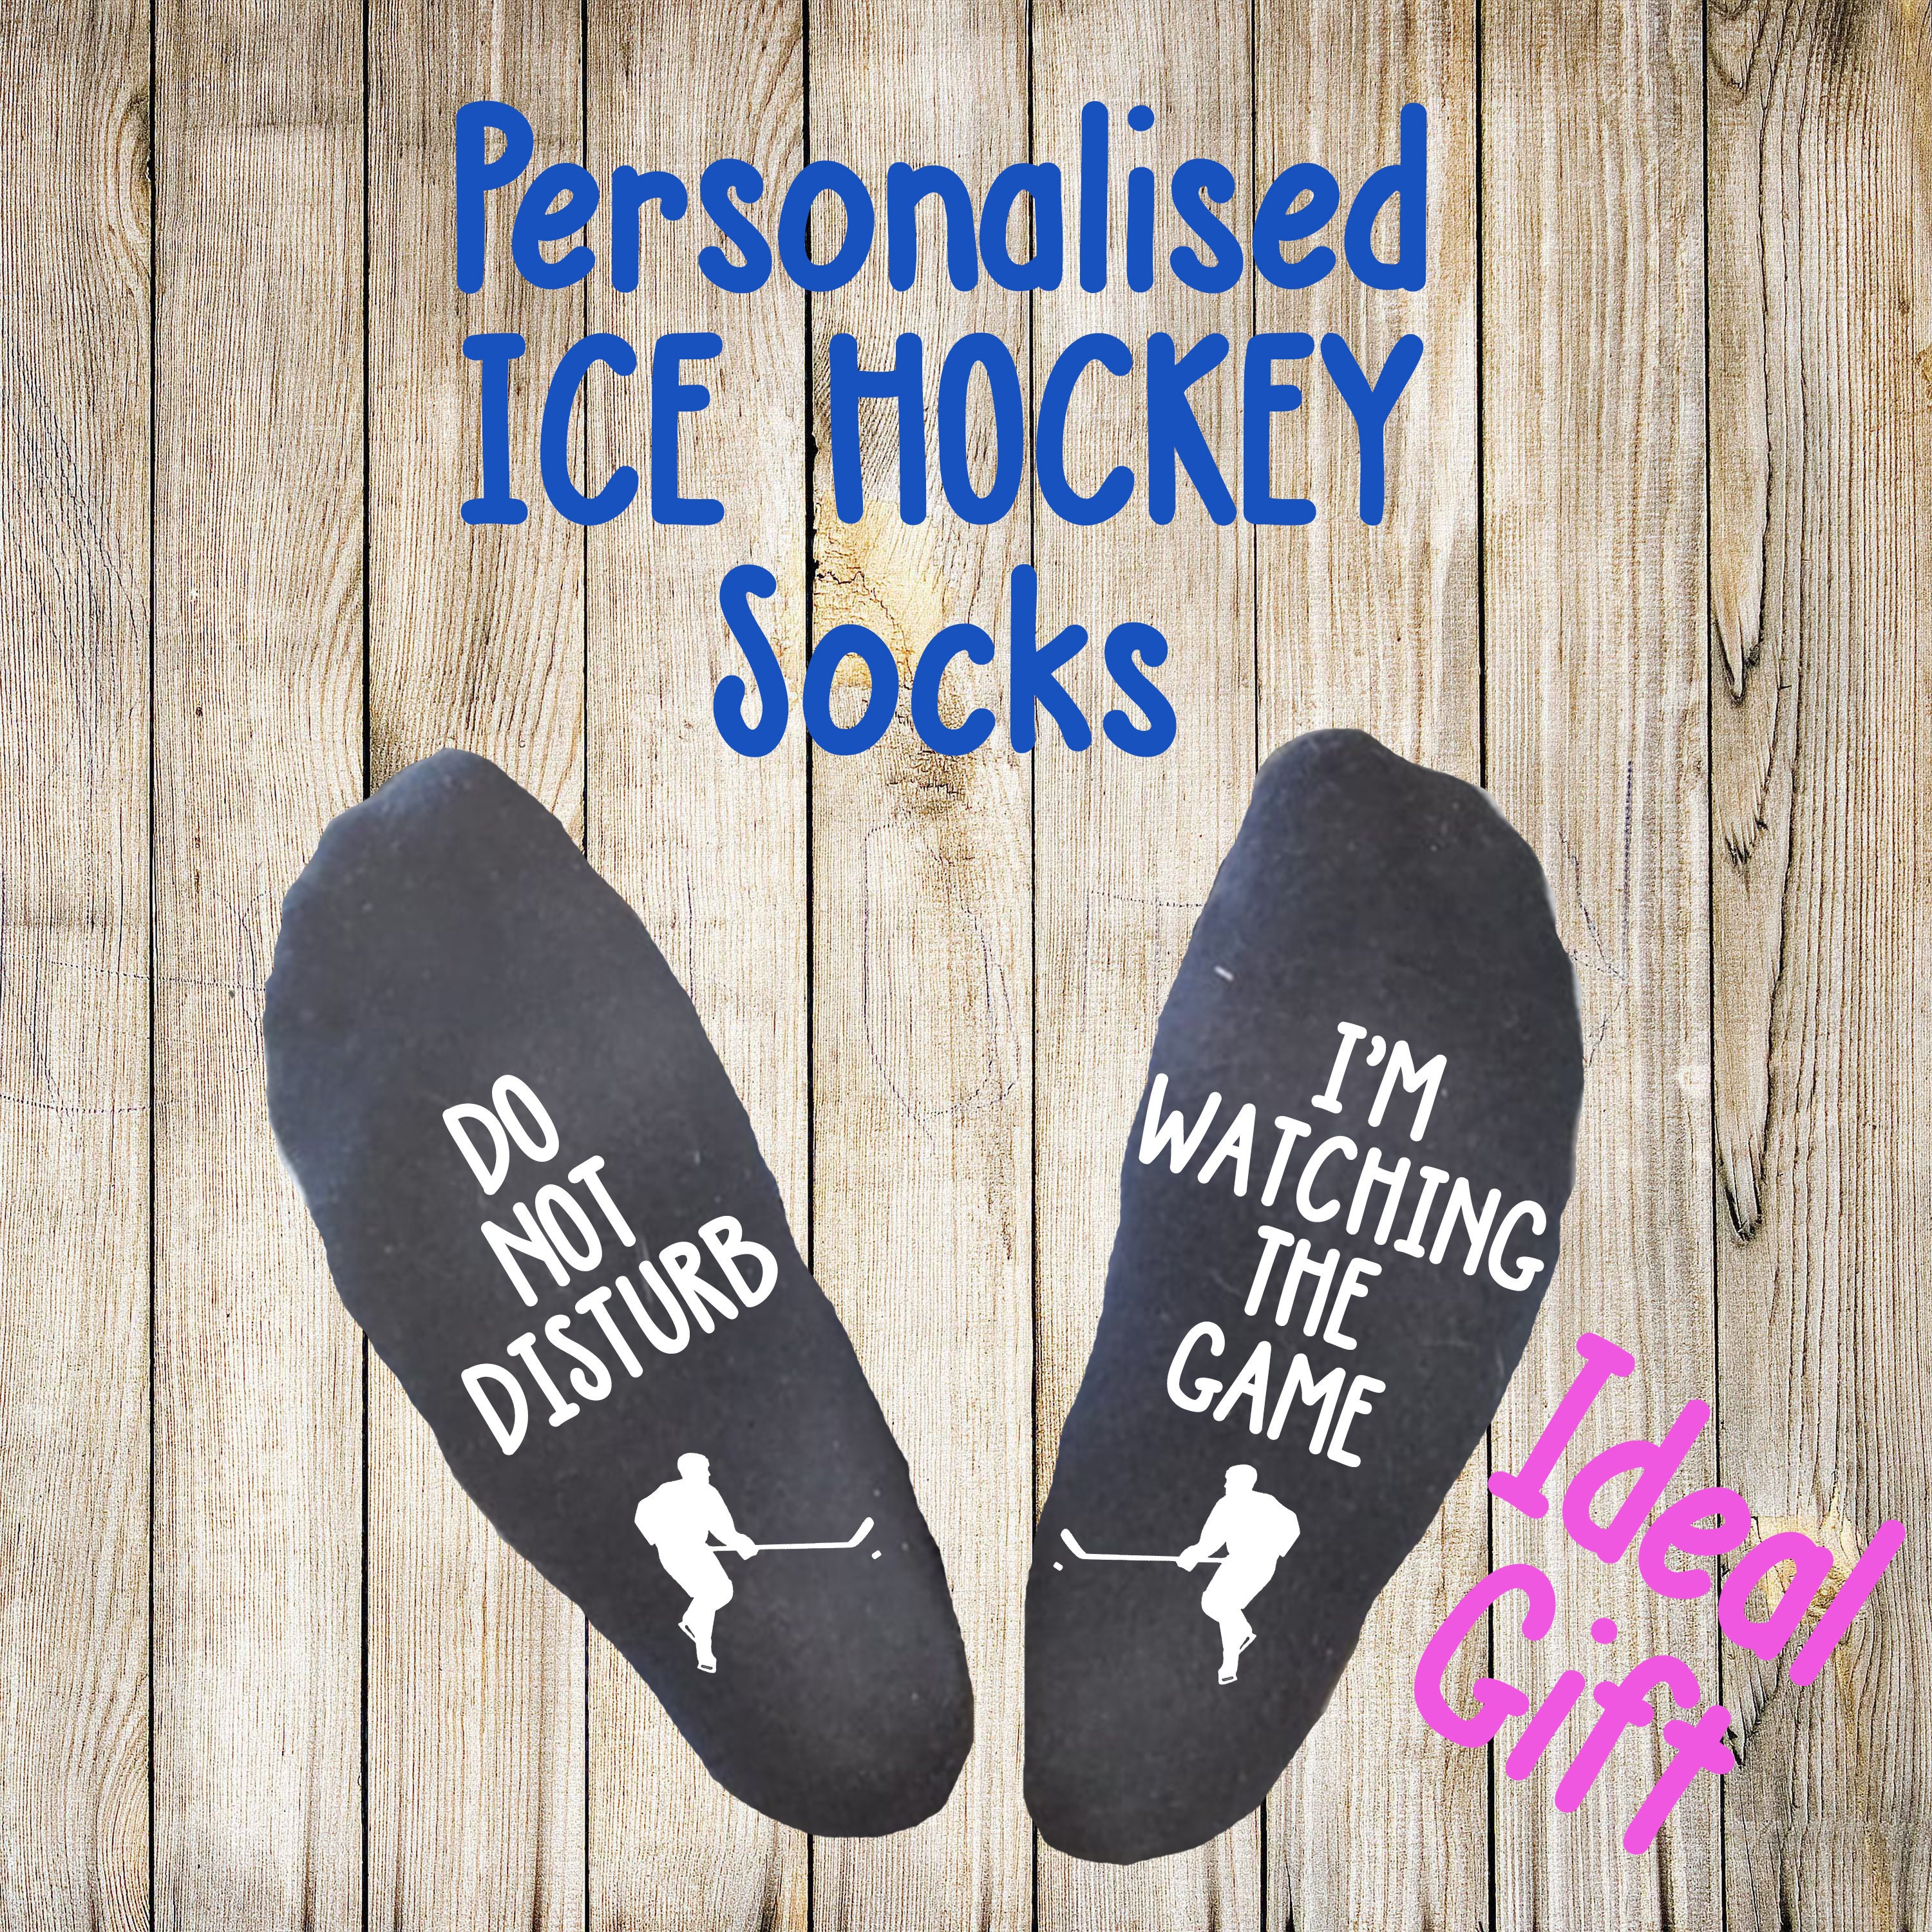 Shhh The Game Is On Hockey Socks